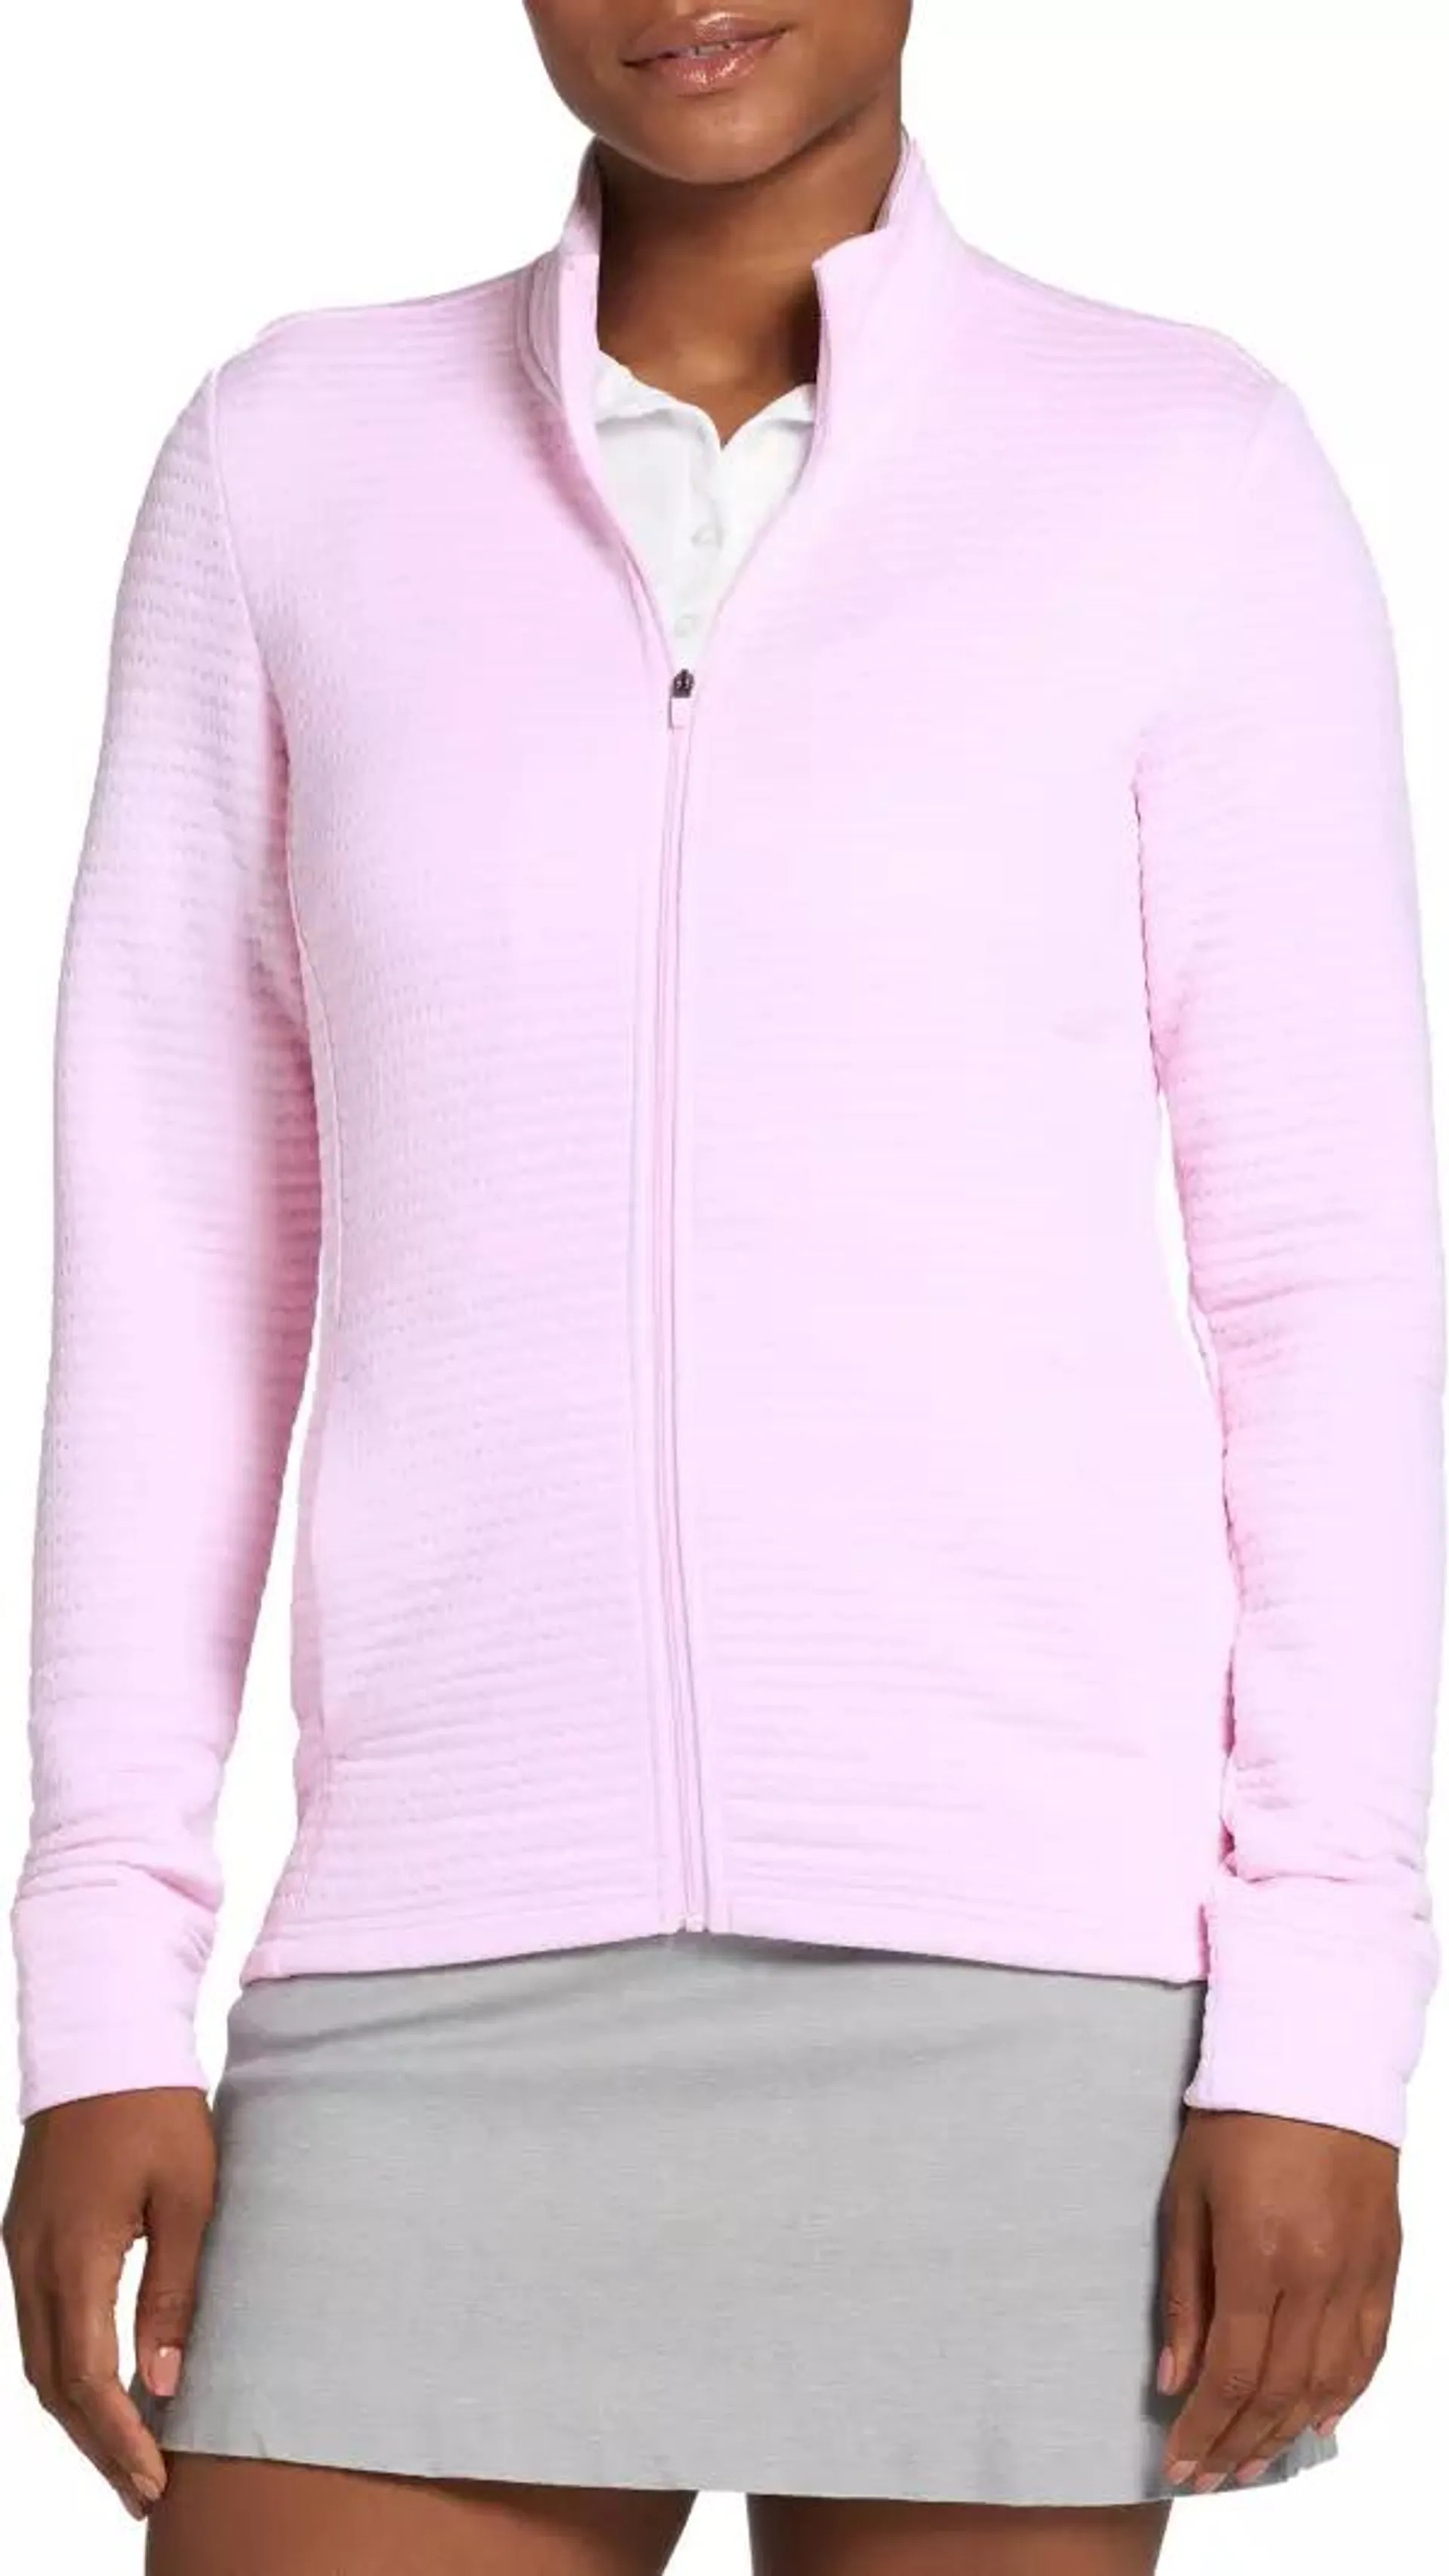 Lady Hagen Women's Embossed Full-Zip Golf Jacket